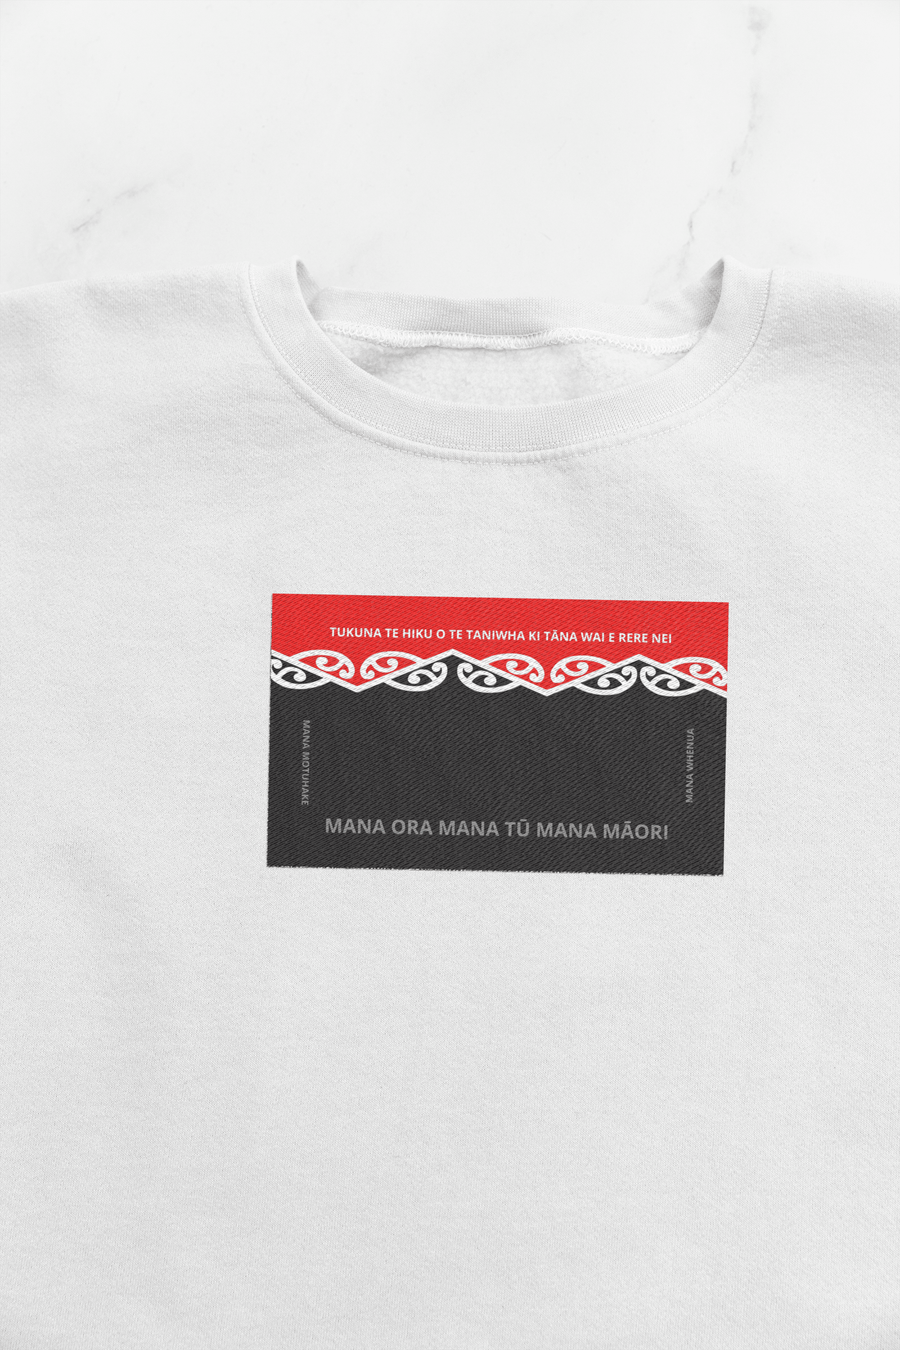 Ko te moko kākahu (official embroidered iron on taniwha logo for clothing) Whiti 